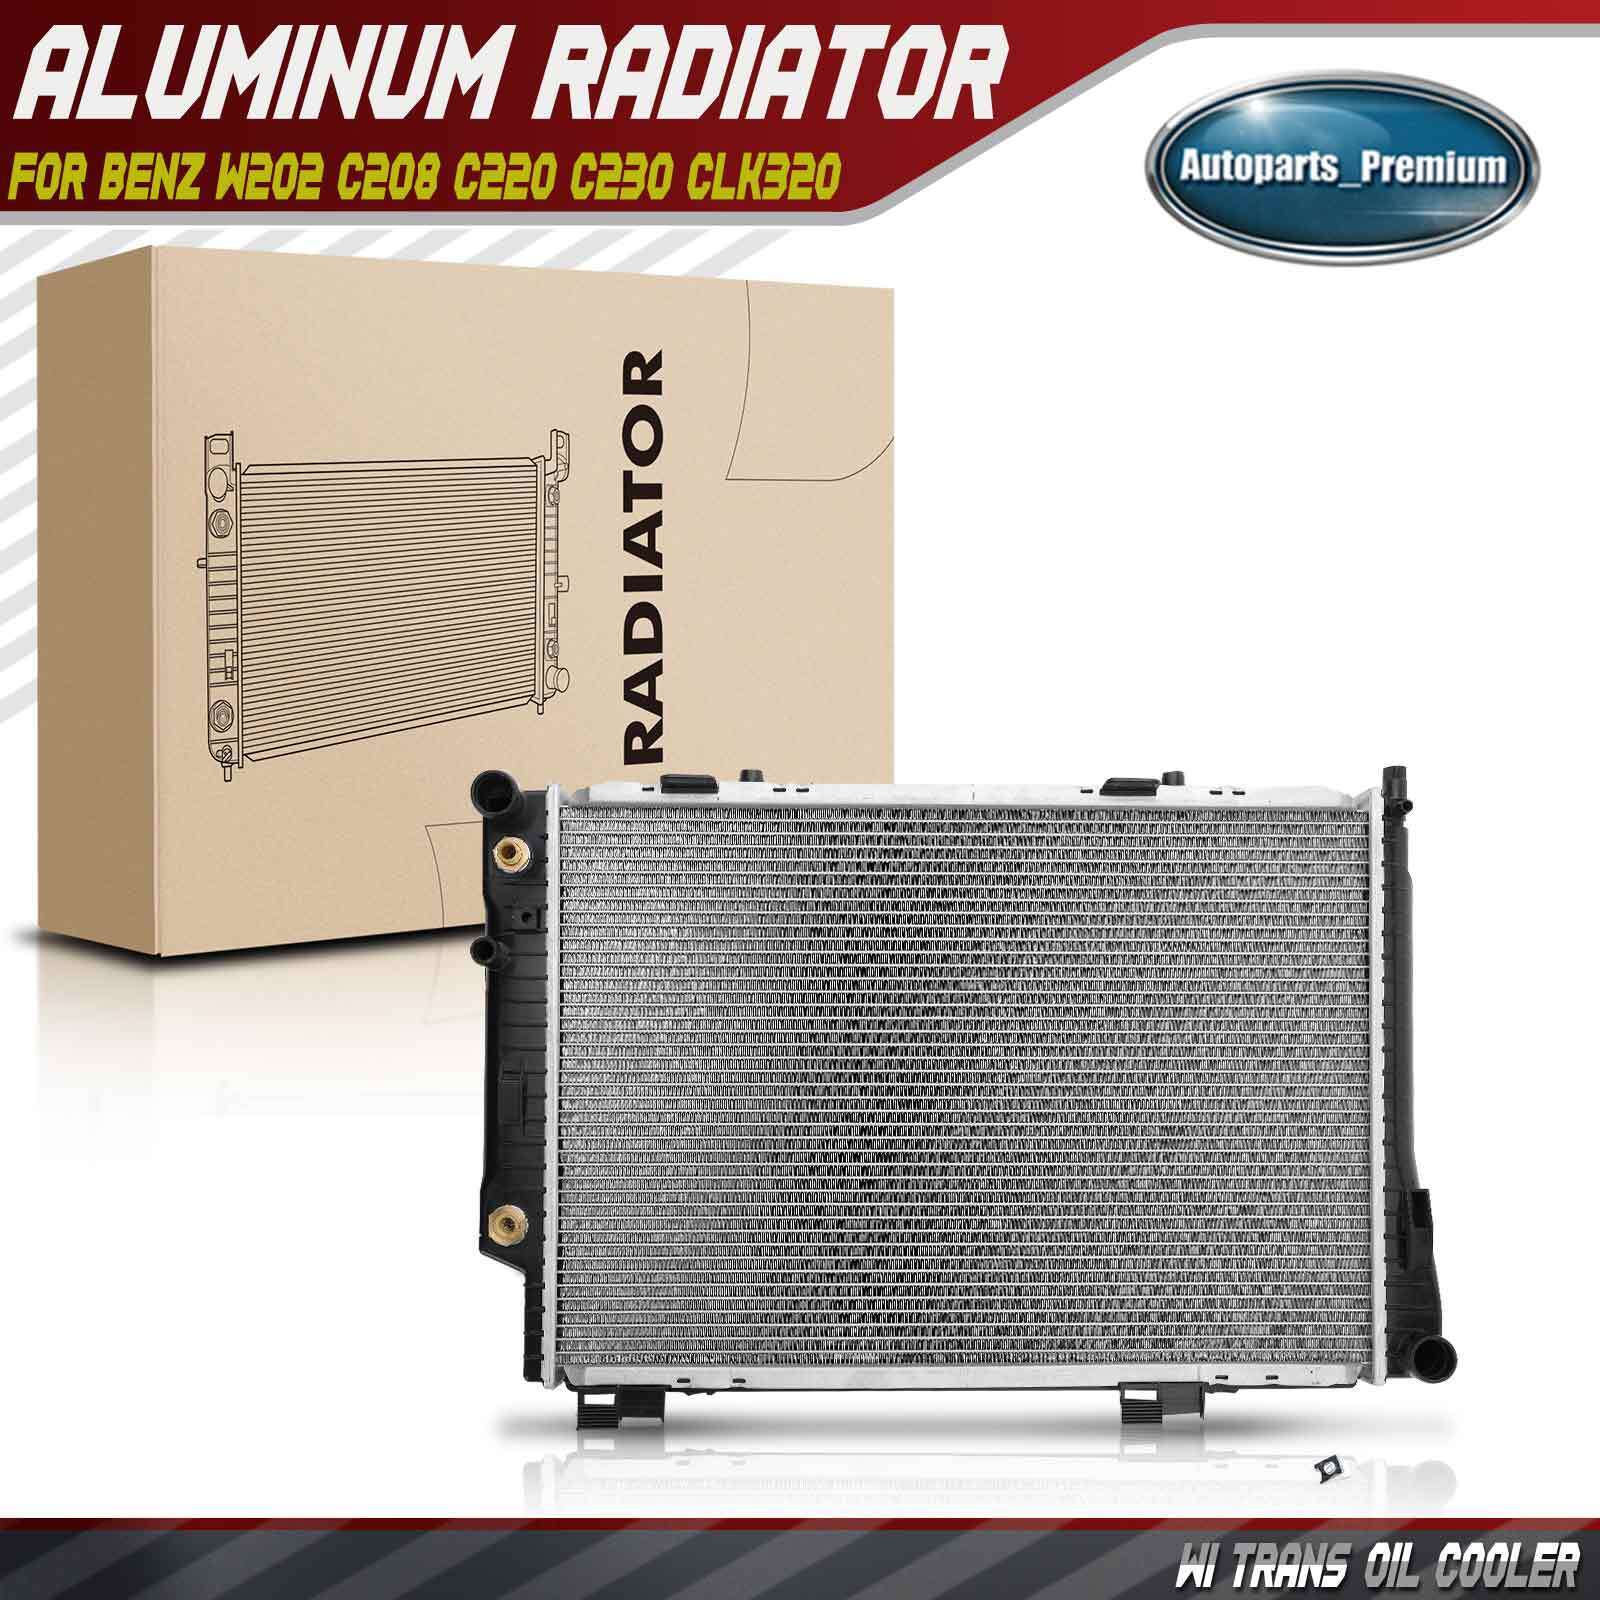 Radiator w/ Transmission Oil Cooler for Mercedes-Benz W202 C208 C220 C230 CLK320